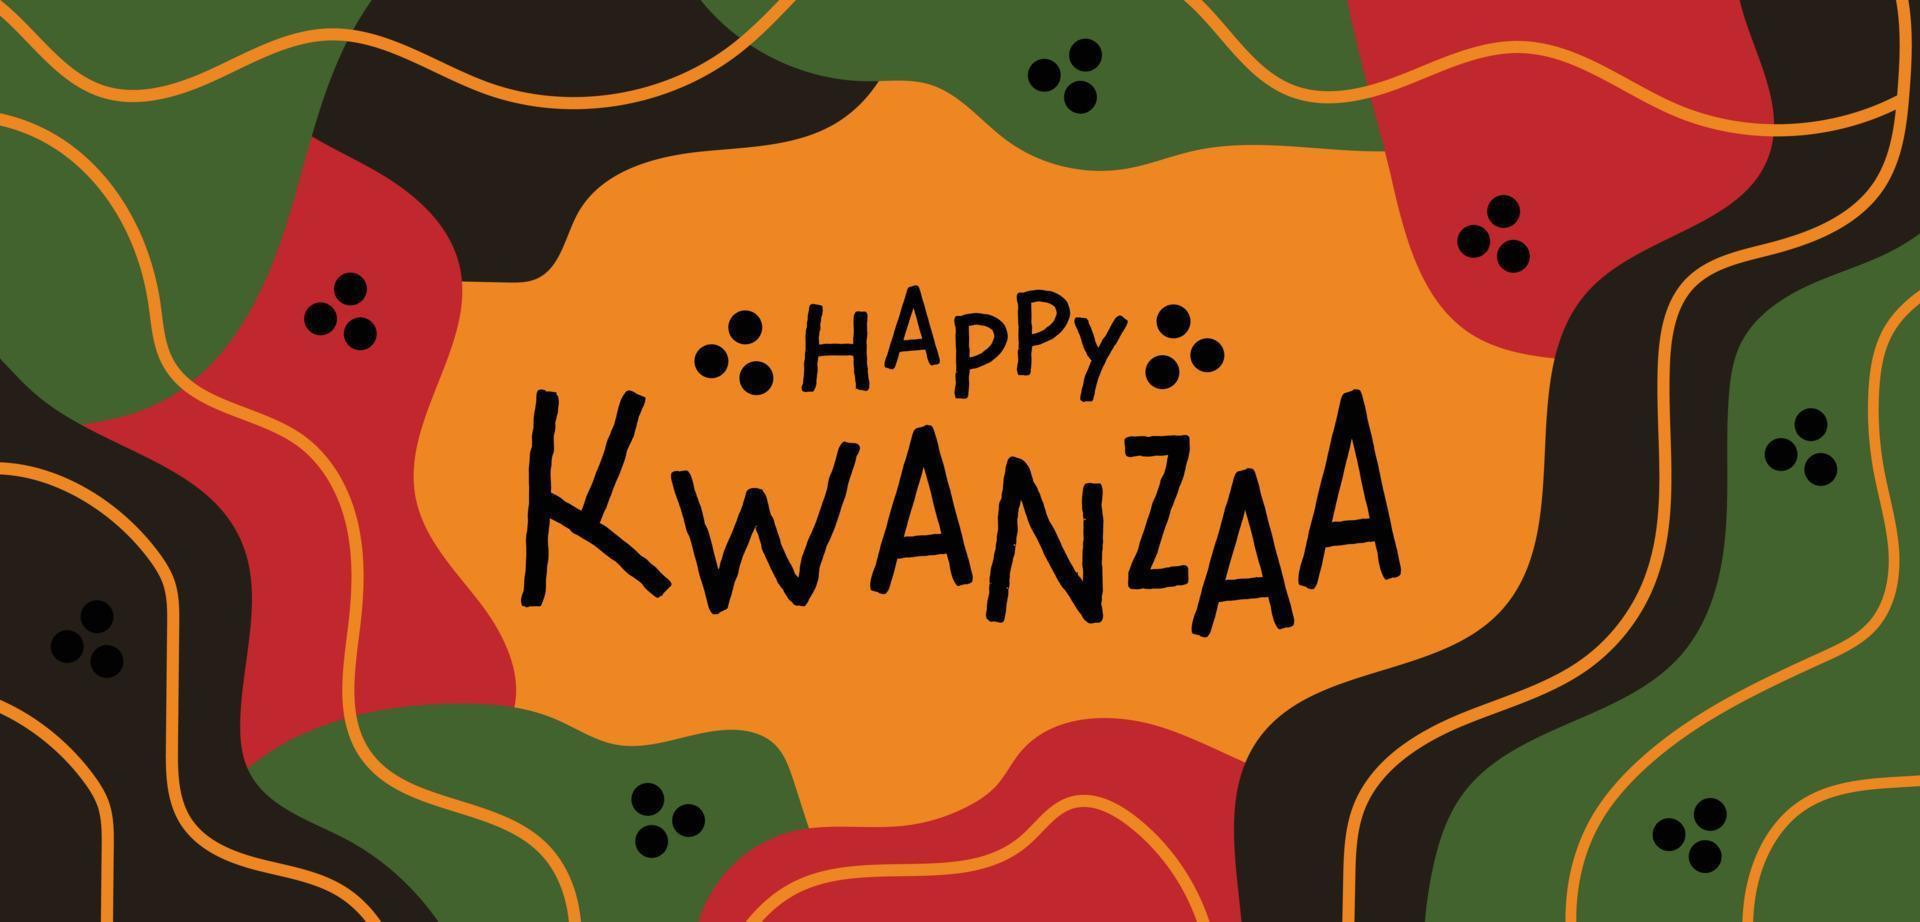 design de banner longo horizontal abstrato feliz kwanzaa com formas orgânicas verdes pretas vermelhas brilhantes aleatórias na cor da bandeira pan-africana, borda de linhas. modelo de vetor para kwanzaa afro-americano